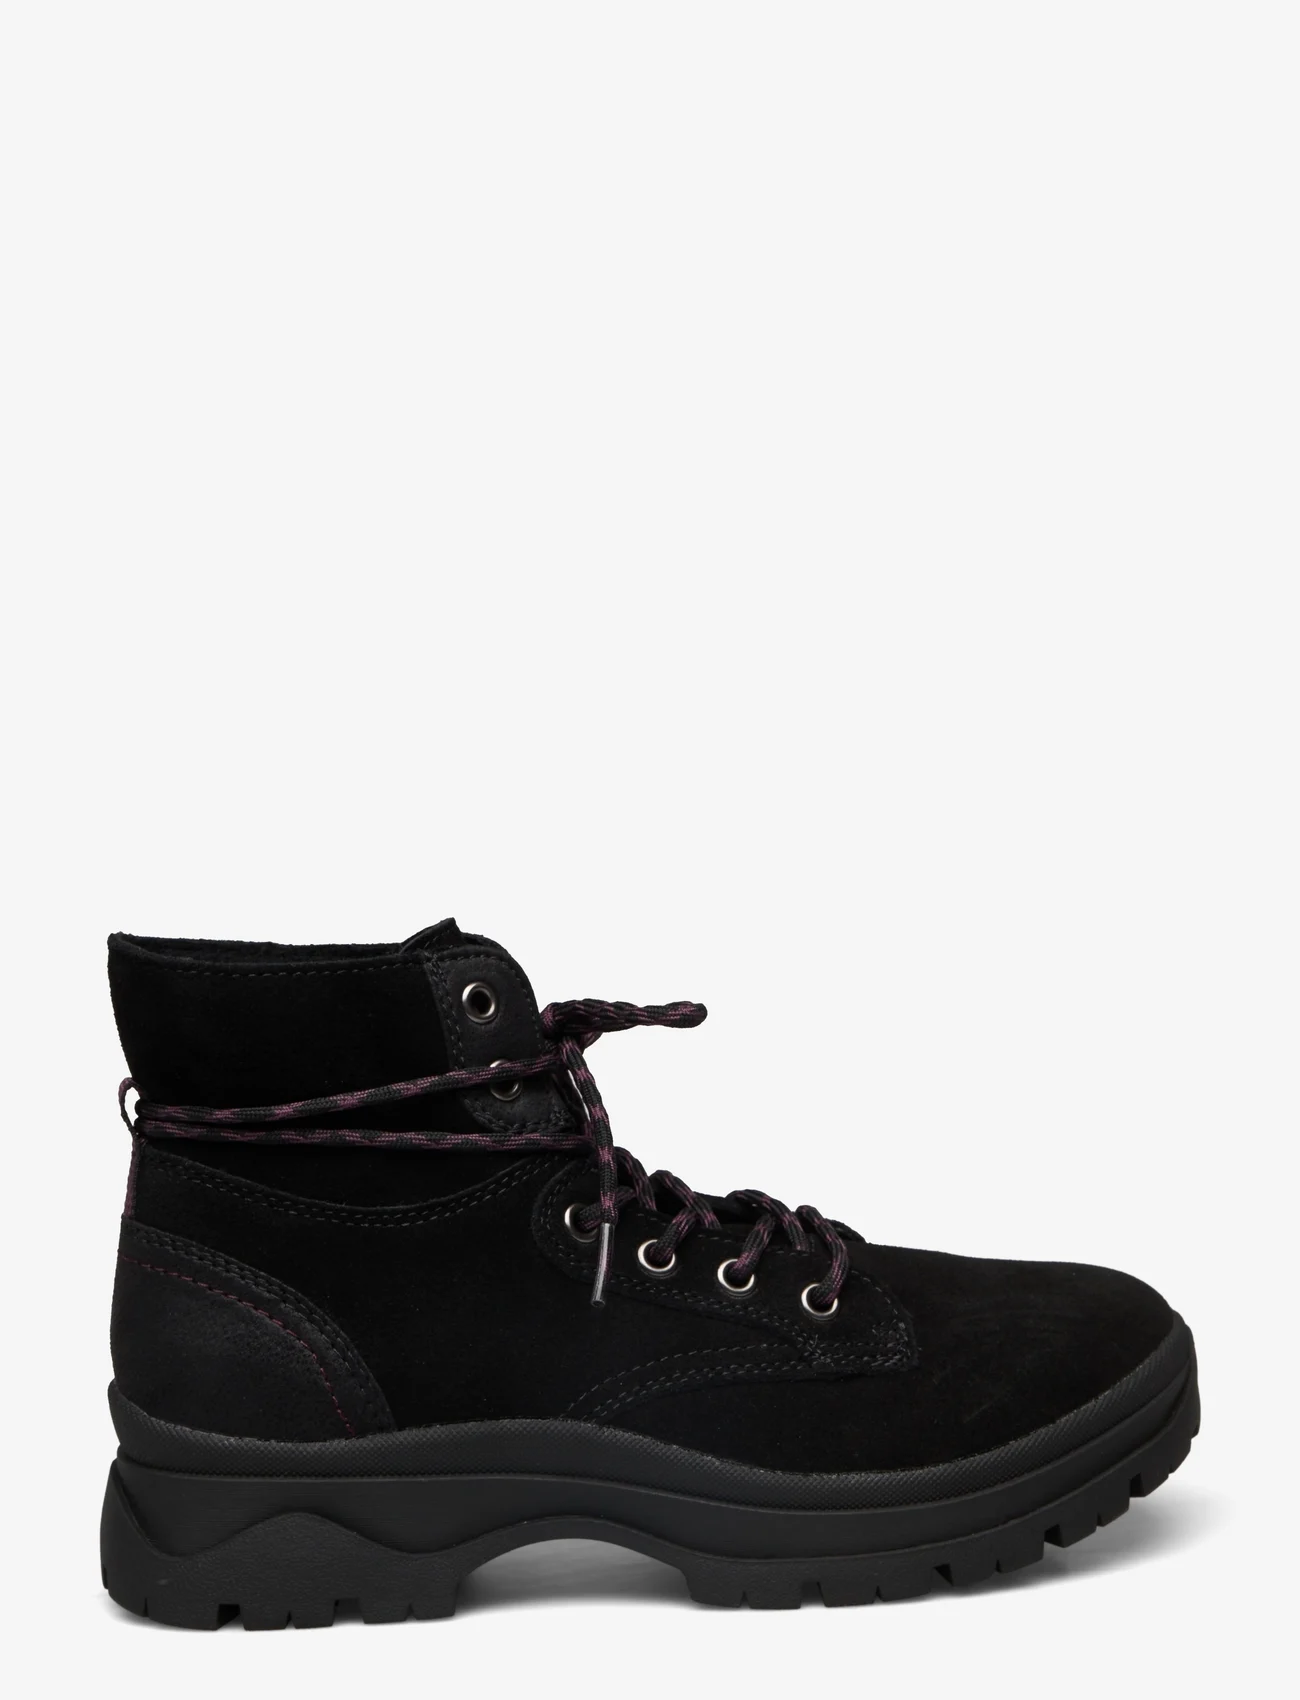 Skechers - Womens BOBS Broadies - Rockin Gal - laced boots - bbk black - 1